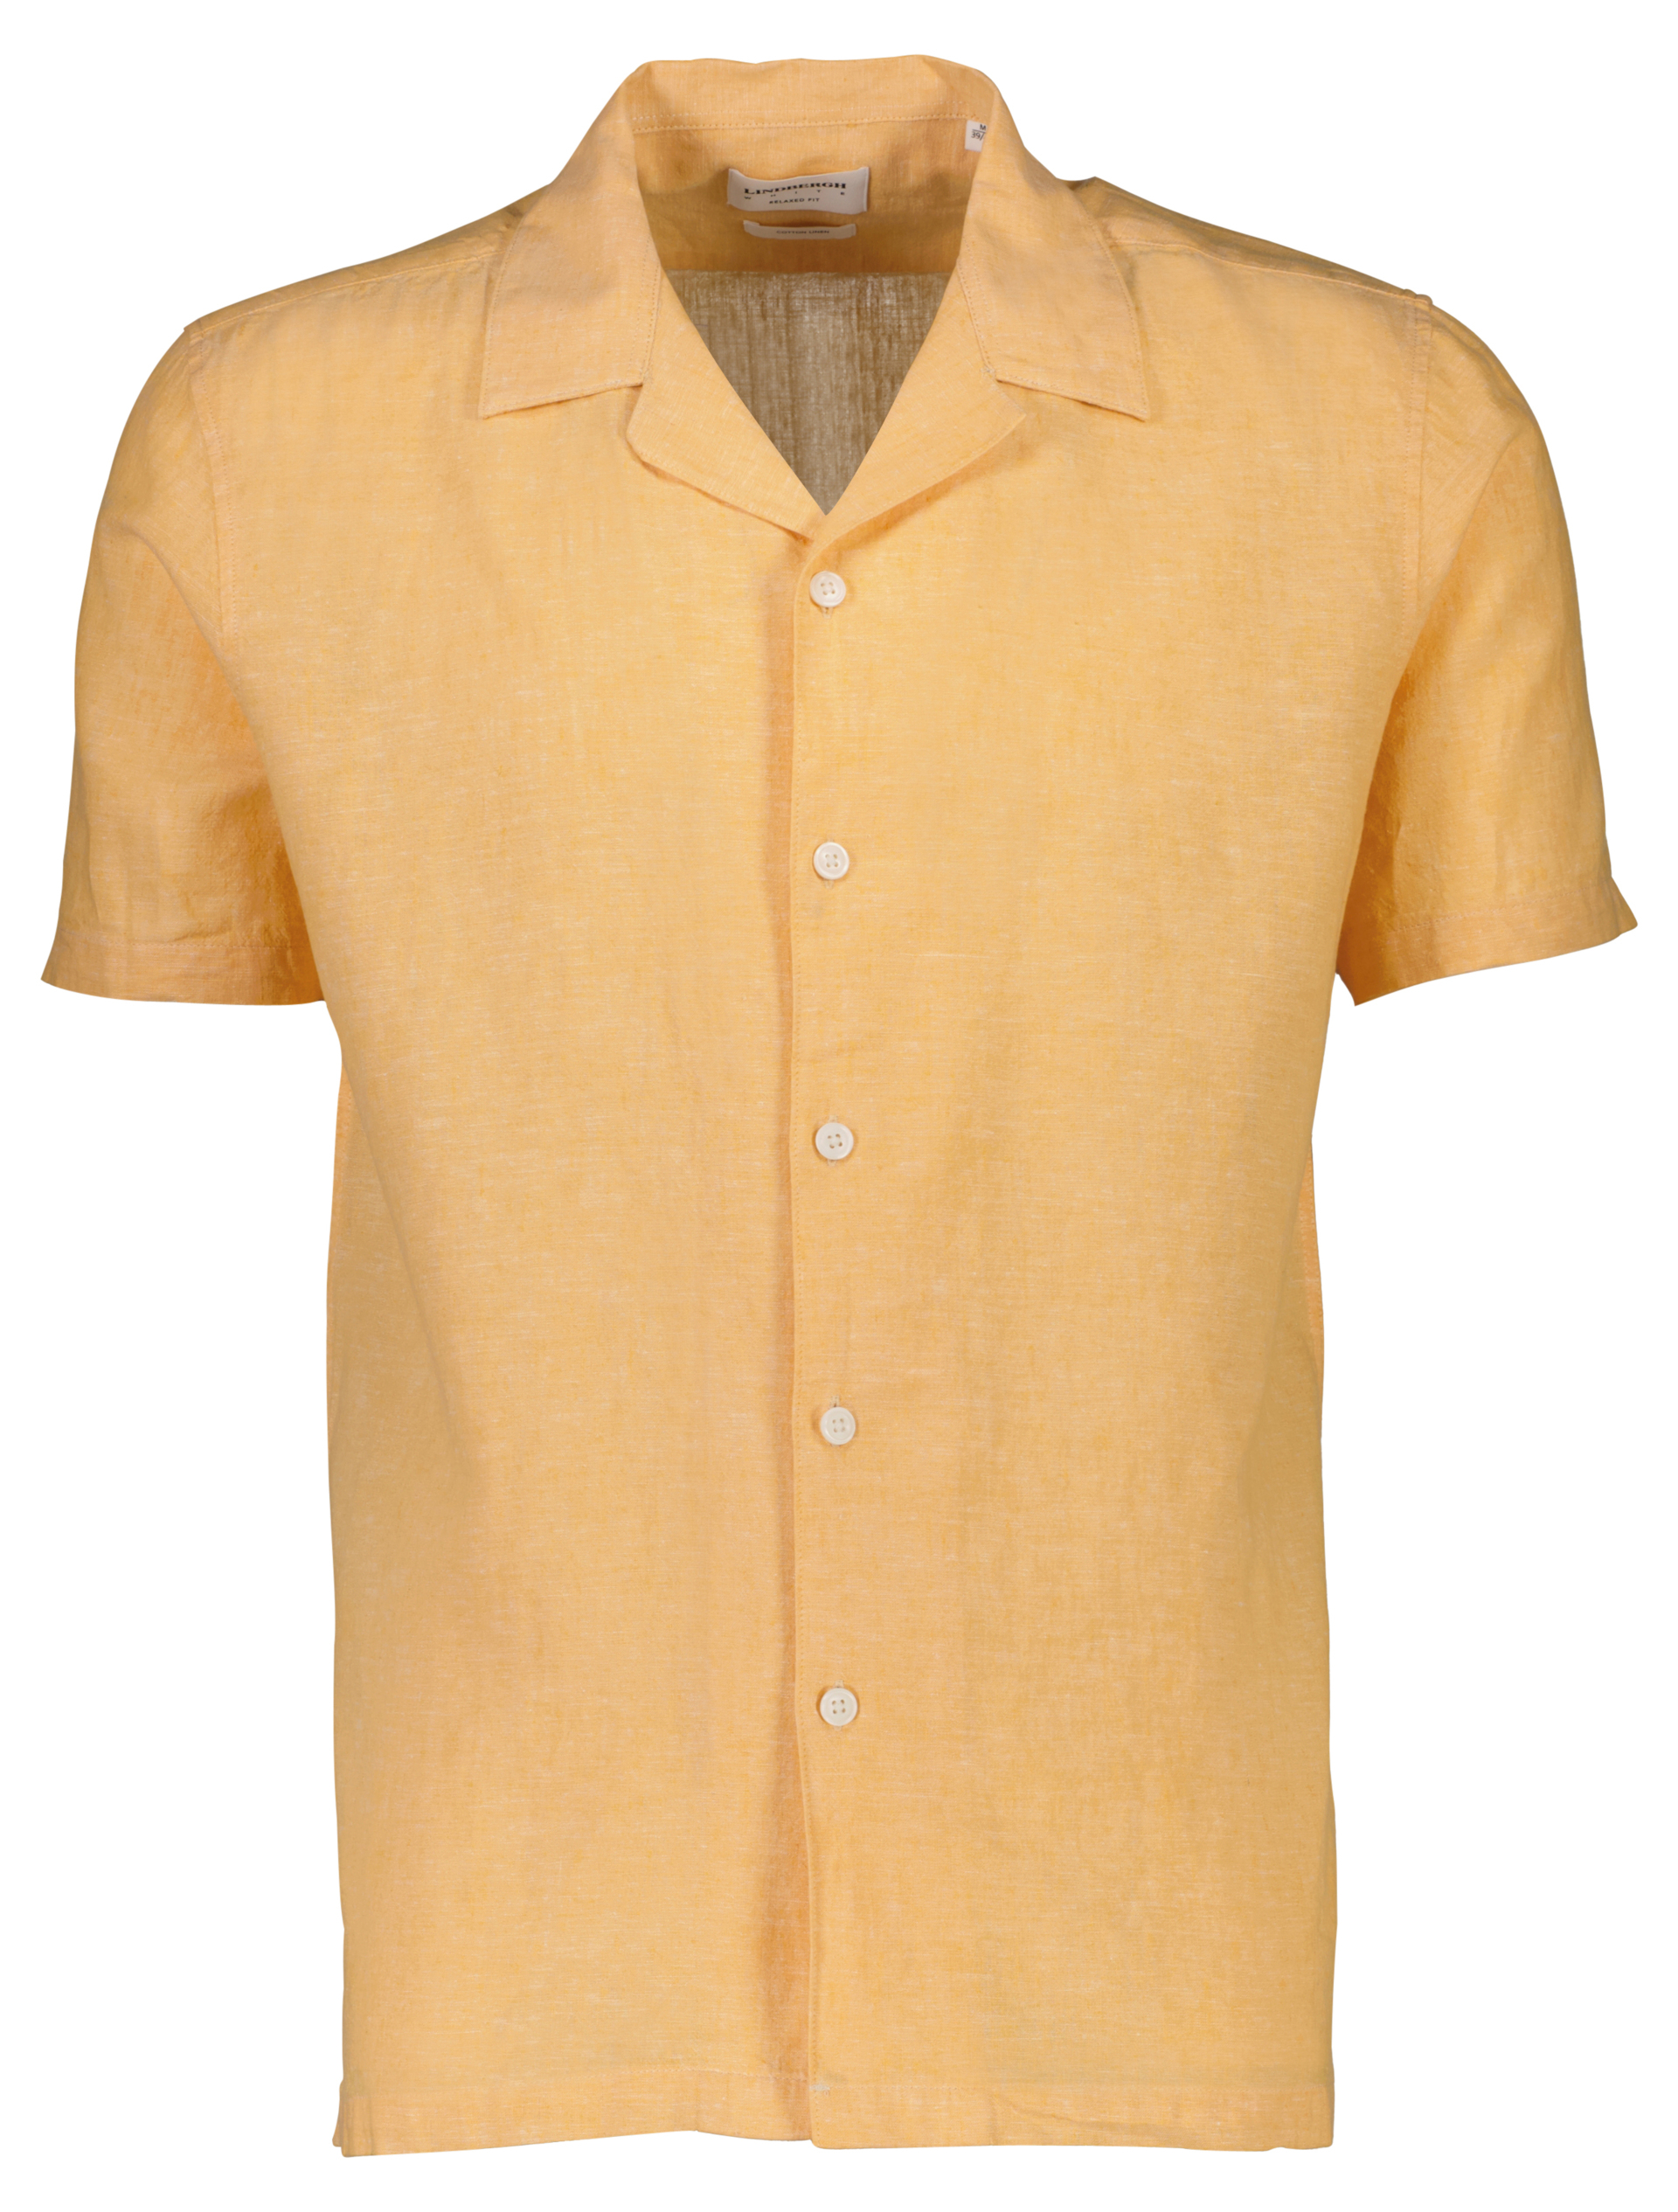 Lindbergh Linen shirt orange / lt orange